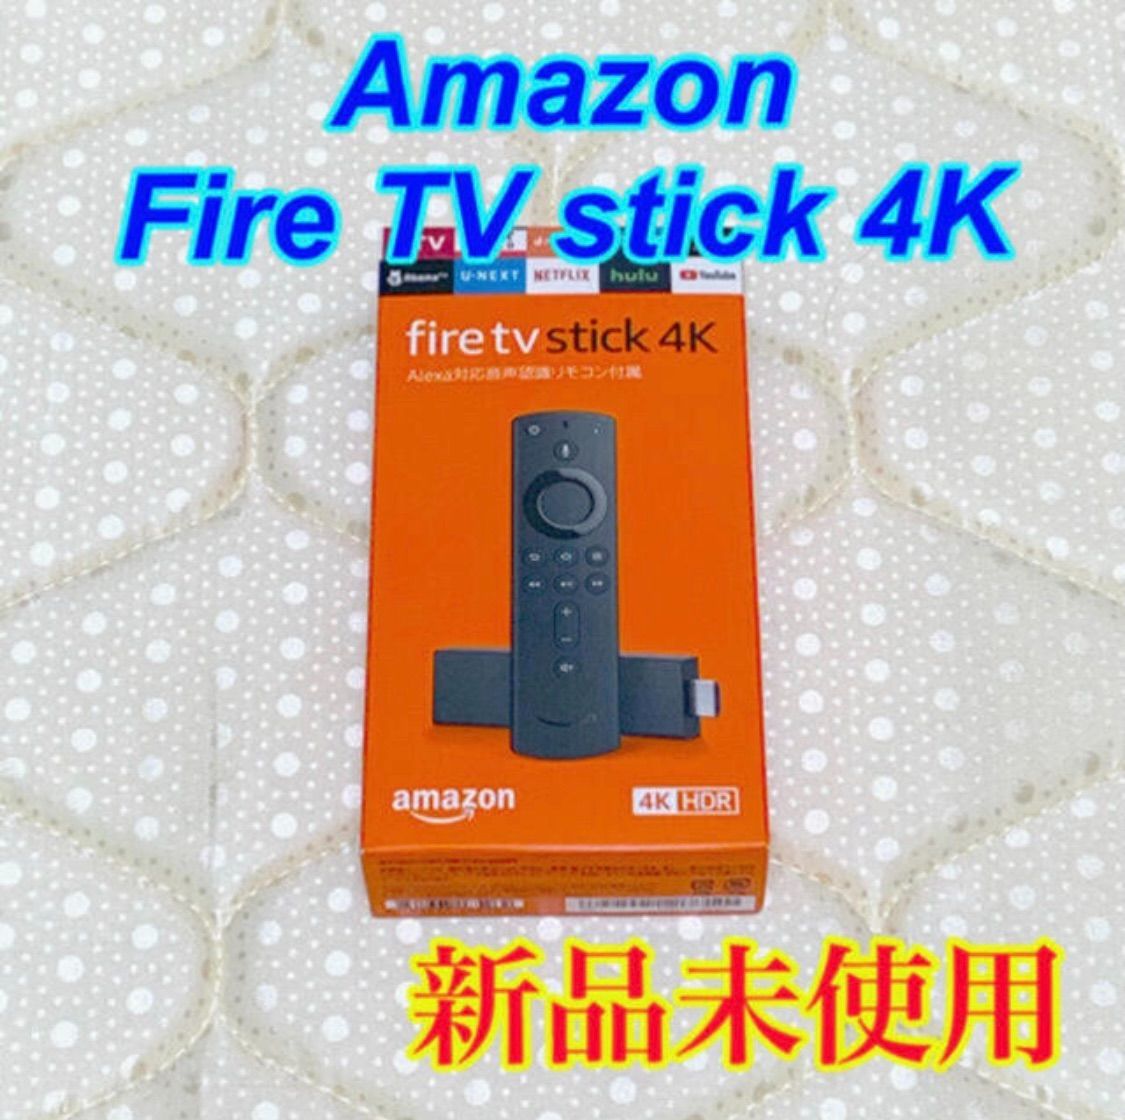 Amazon Fire TV Stick 4K - ケイアールショップ - メルカリ